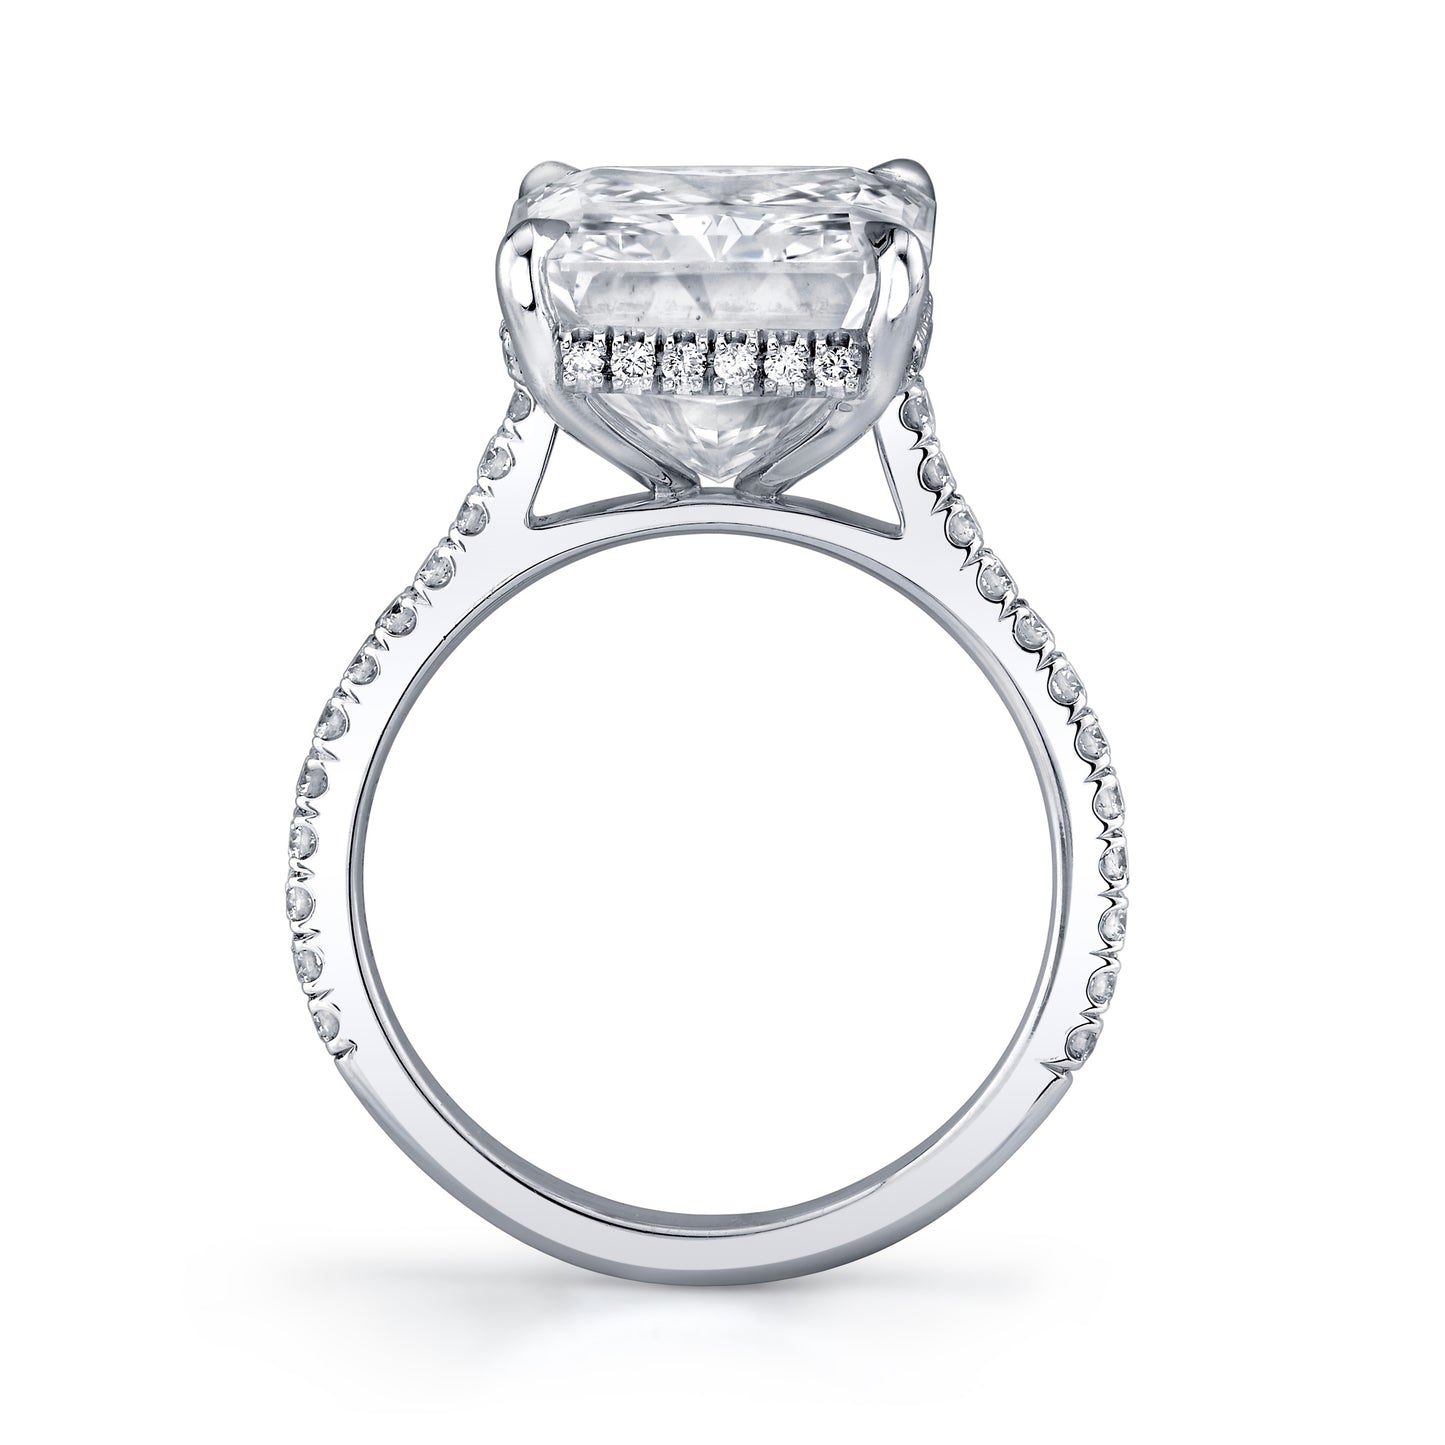 8.42 carat Radiant Cut Diamond Ring